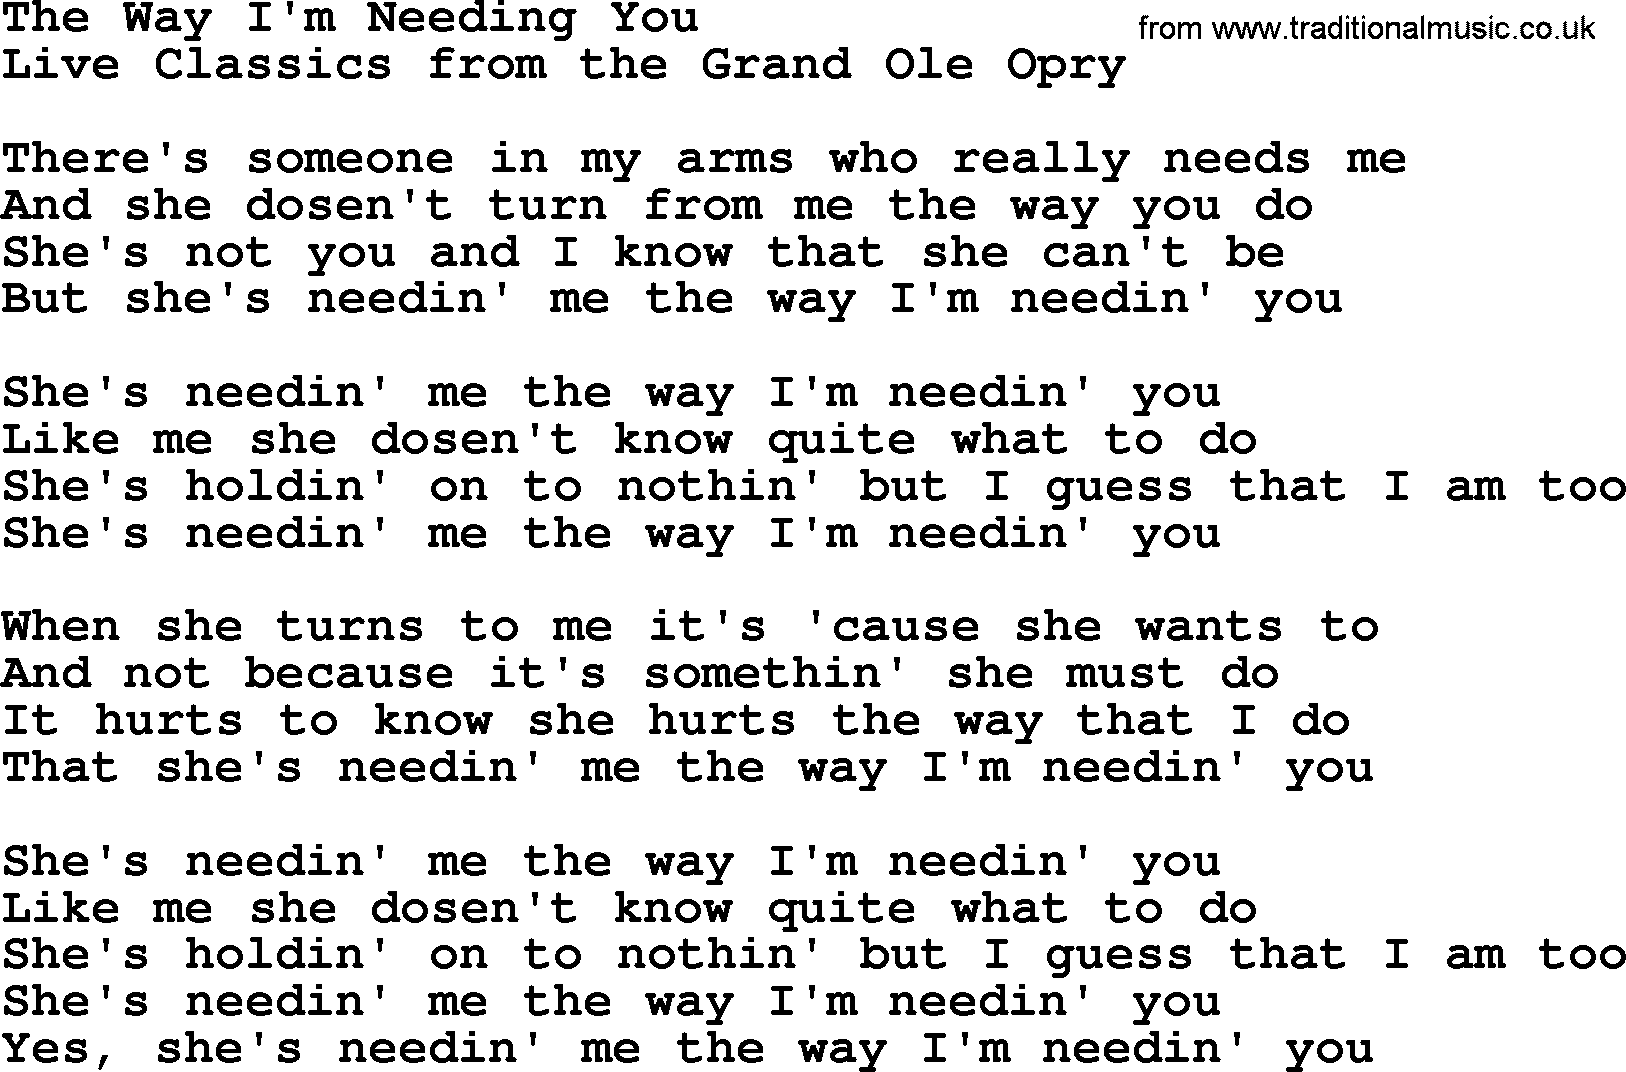 Marty Robbins song: The Way I'm Needing You, lyrics